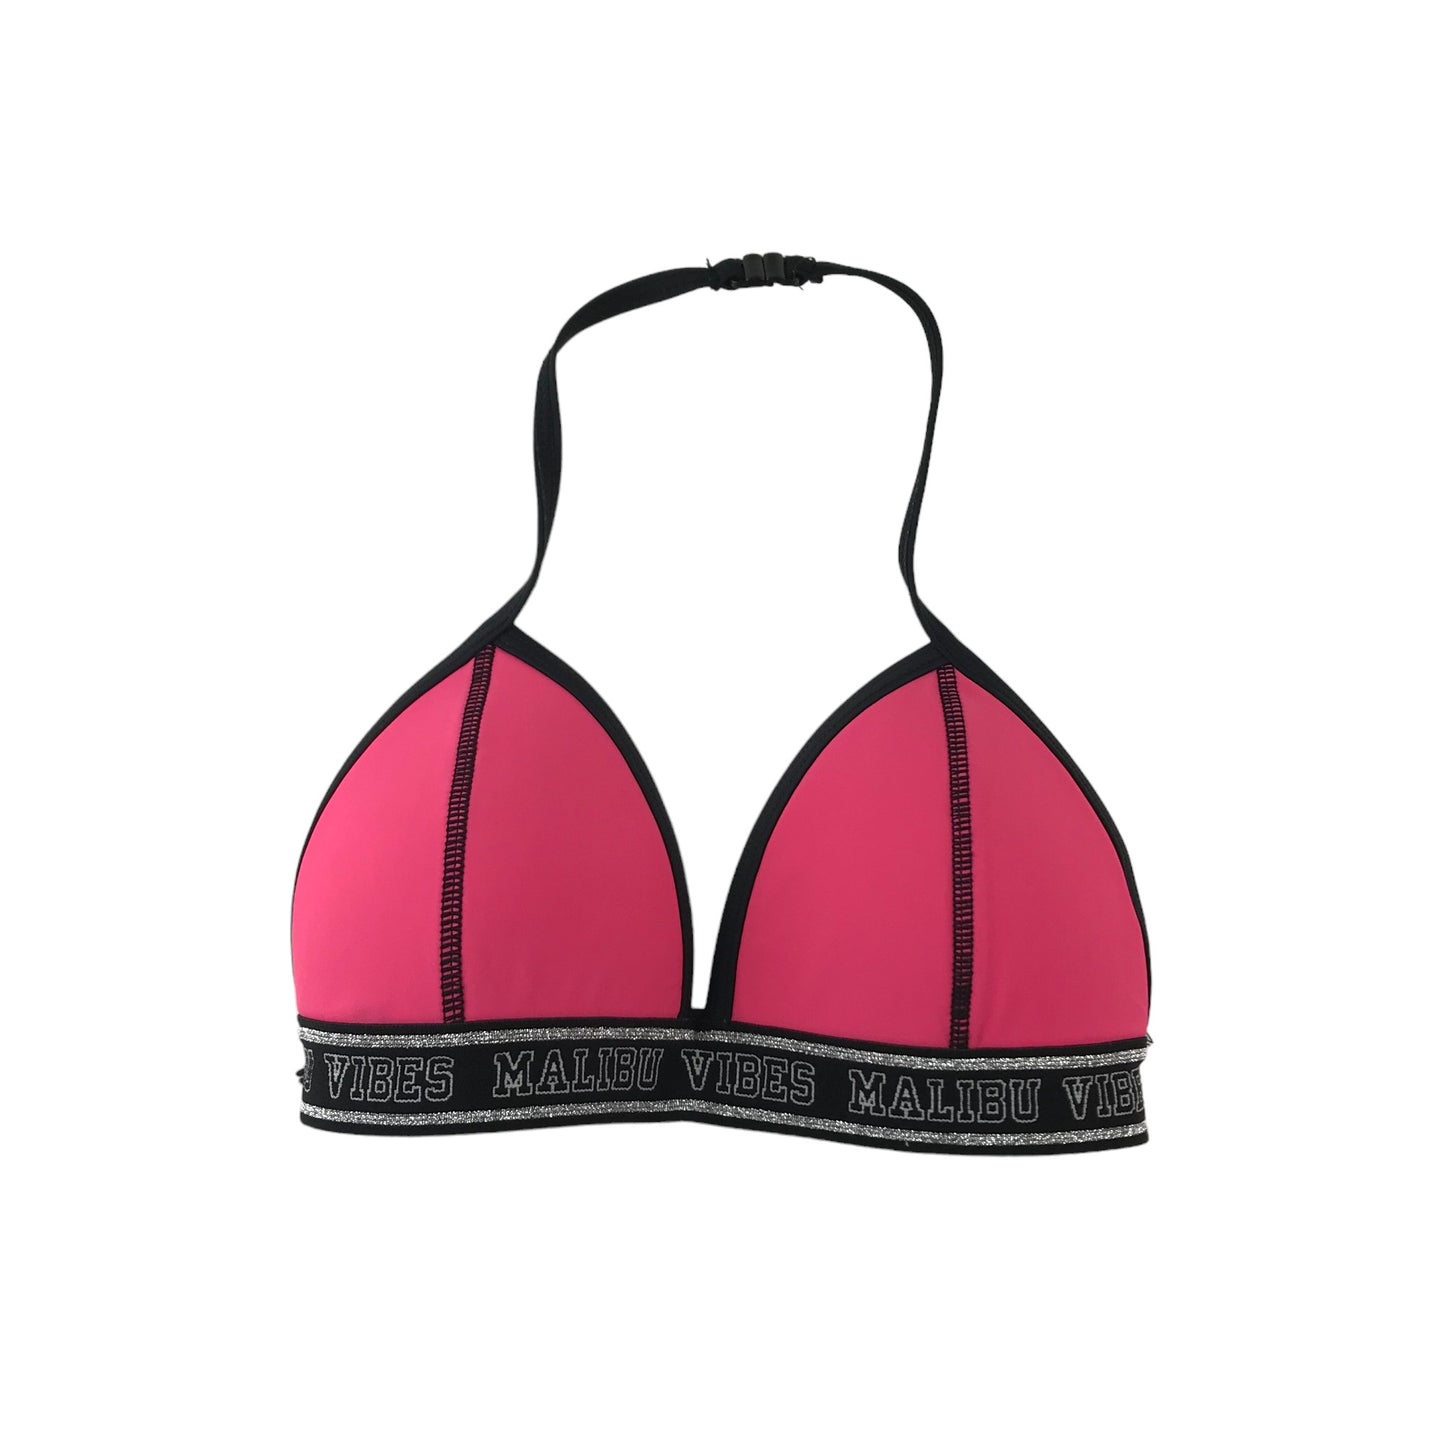 New Look Bikini Age 10 Pink Malibu Vibes 2-Piece Set